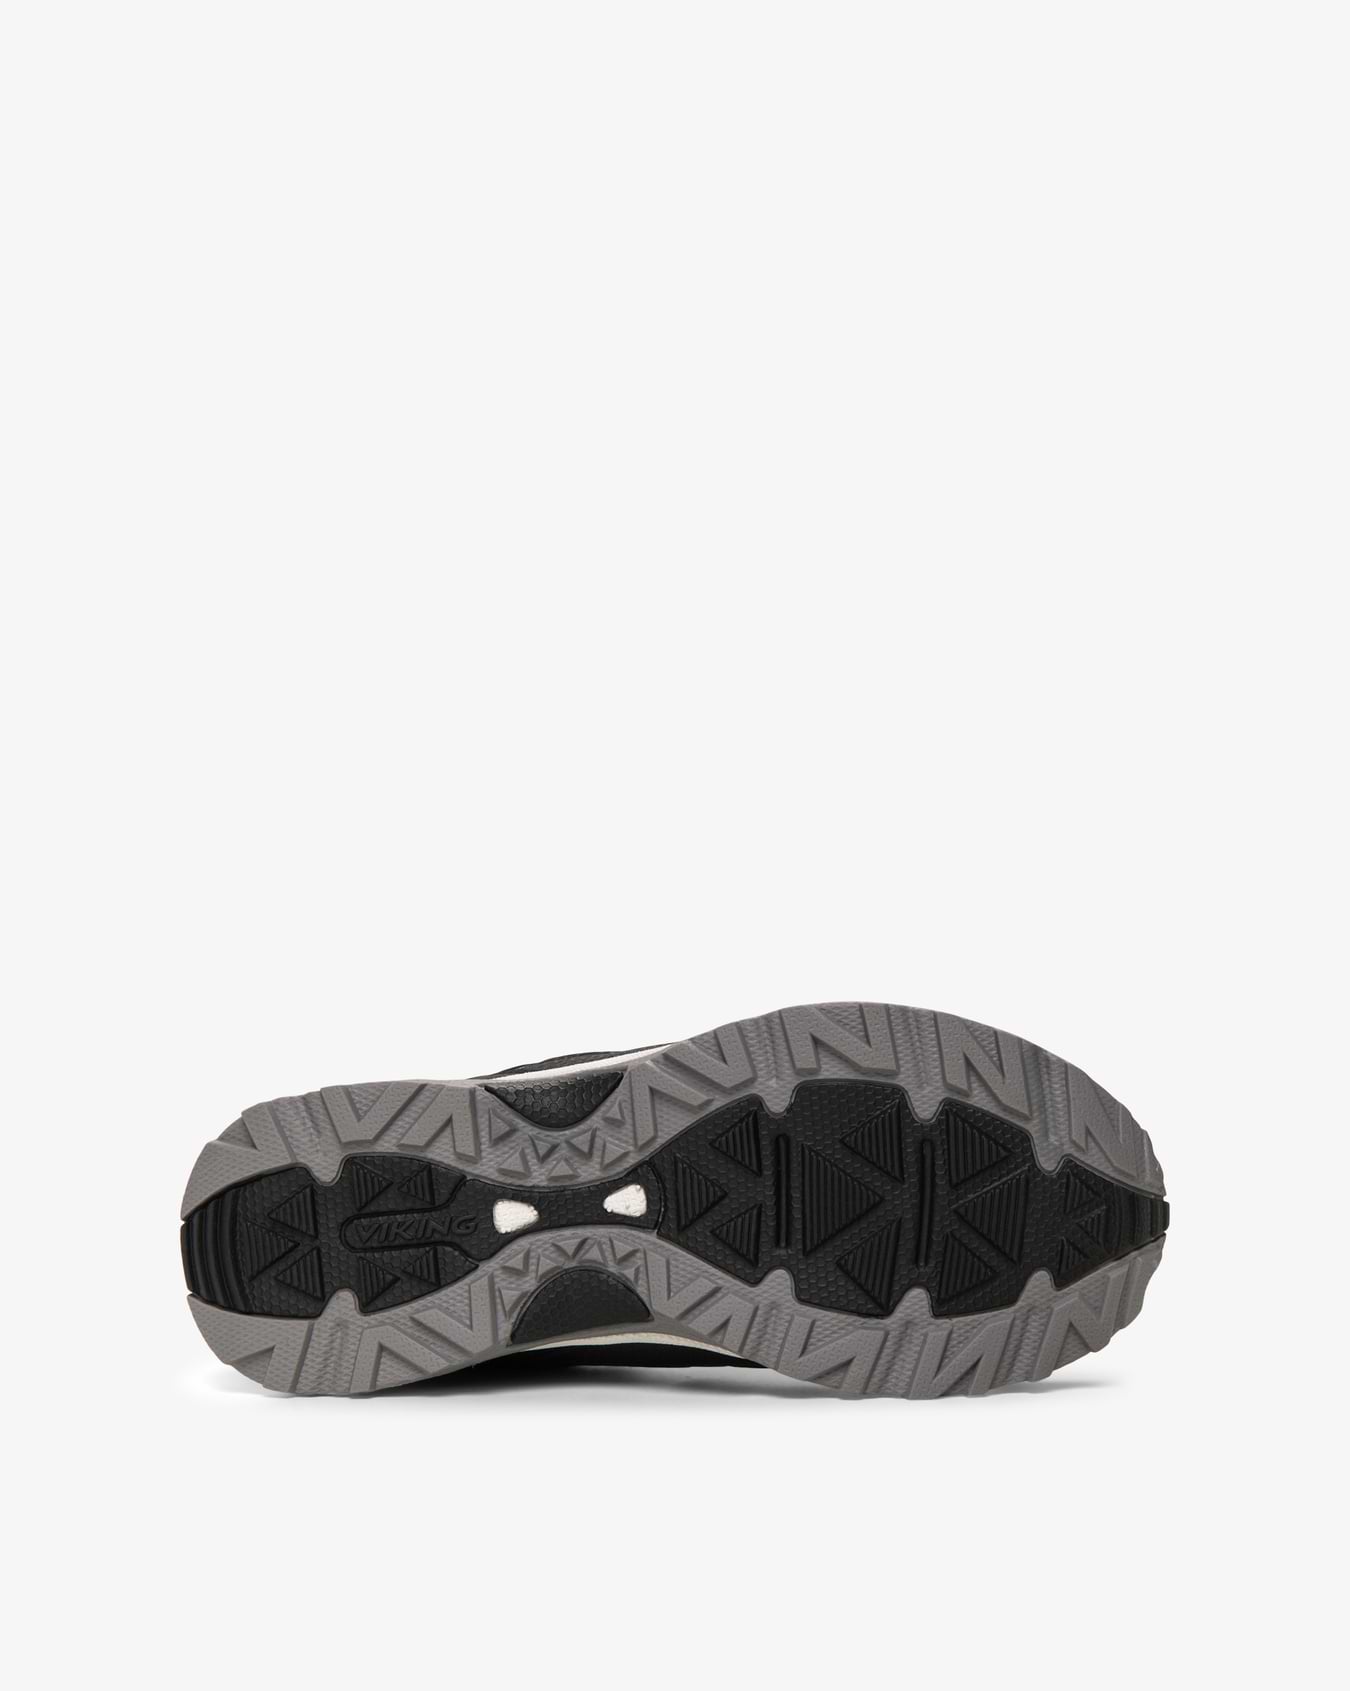 Nator Low GTX Black/Granite Sneaker